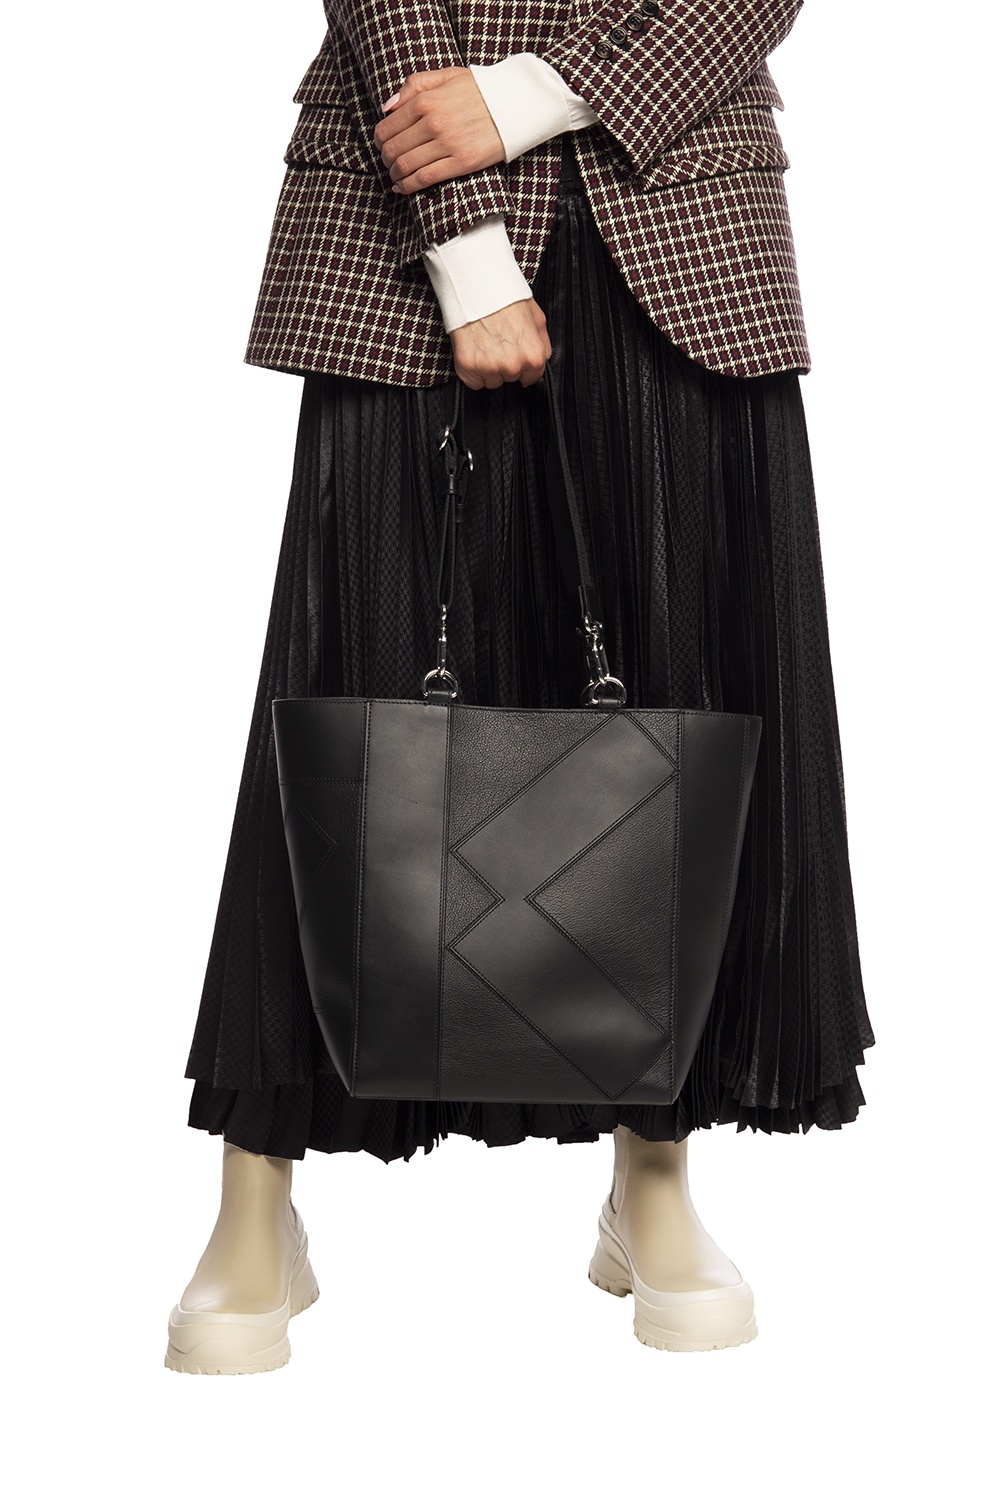 Designer Tartan Baggage : CLOT and Head Porter